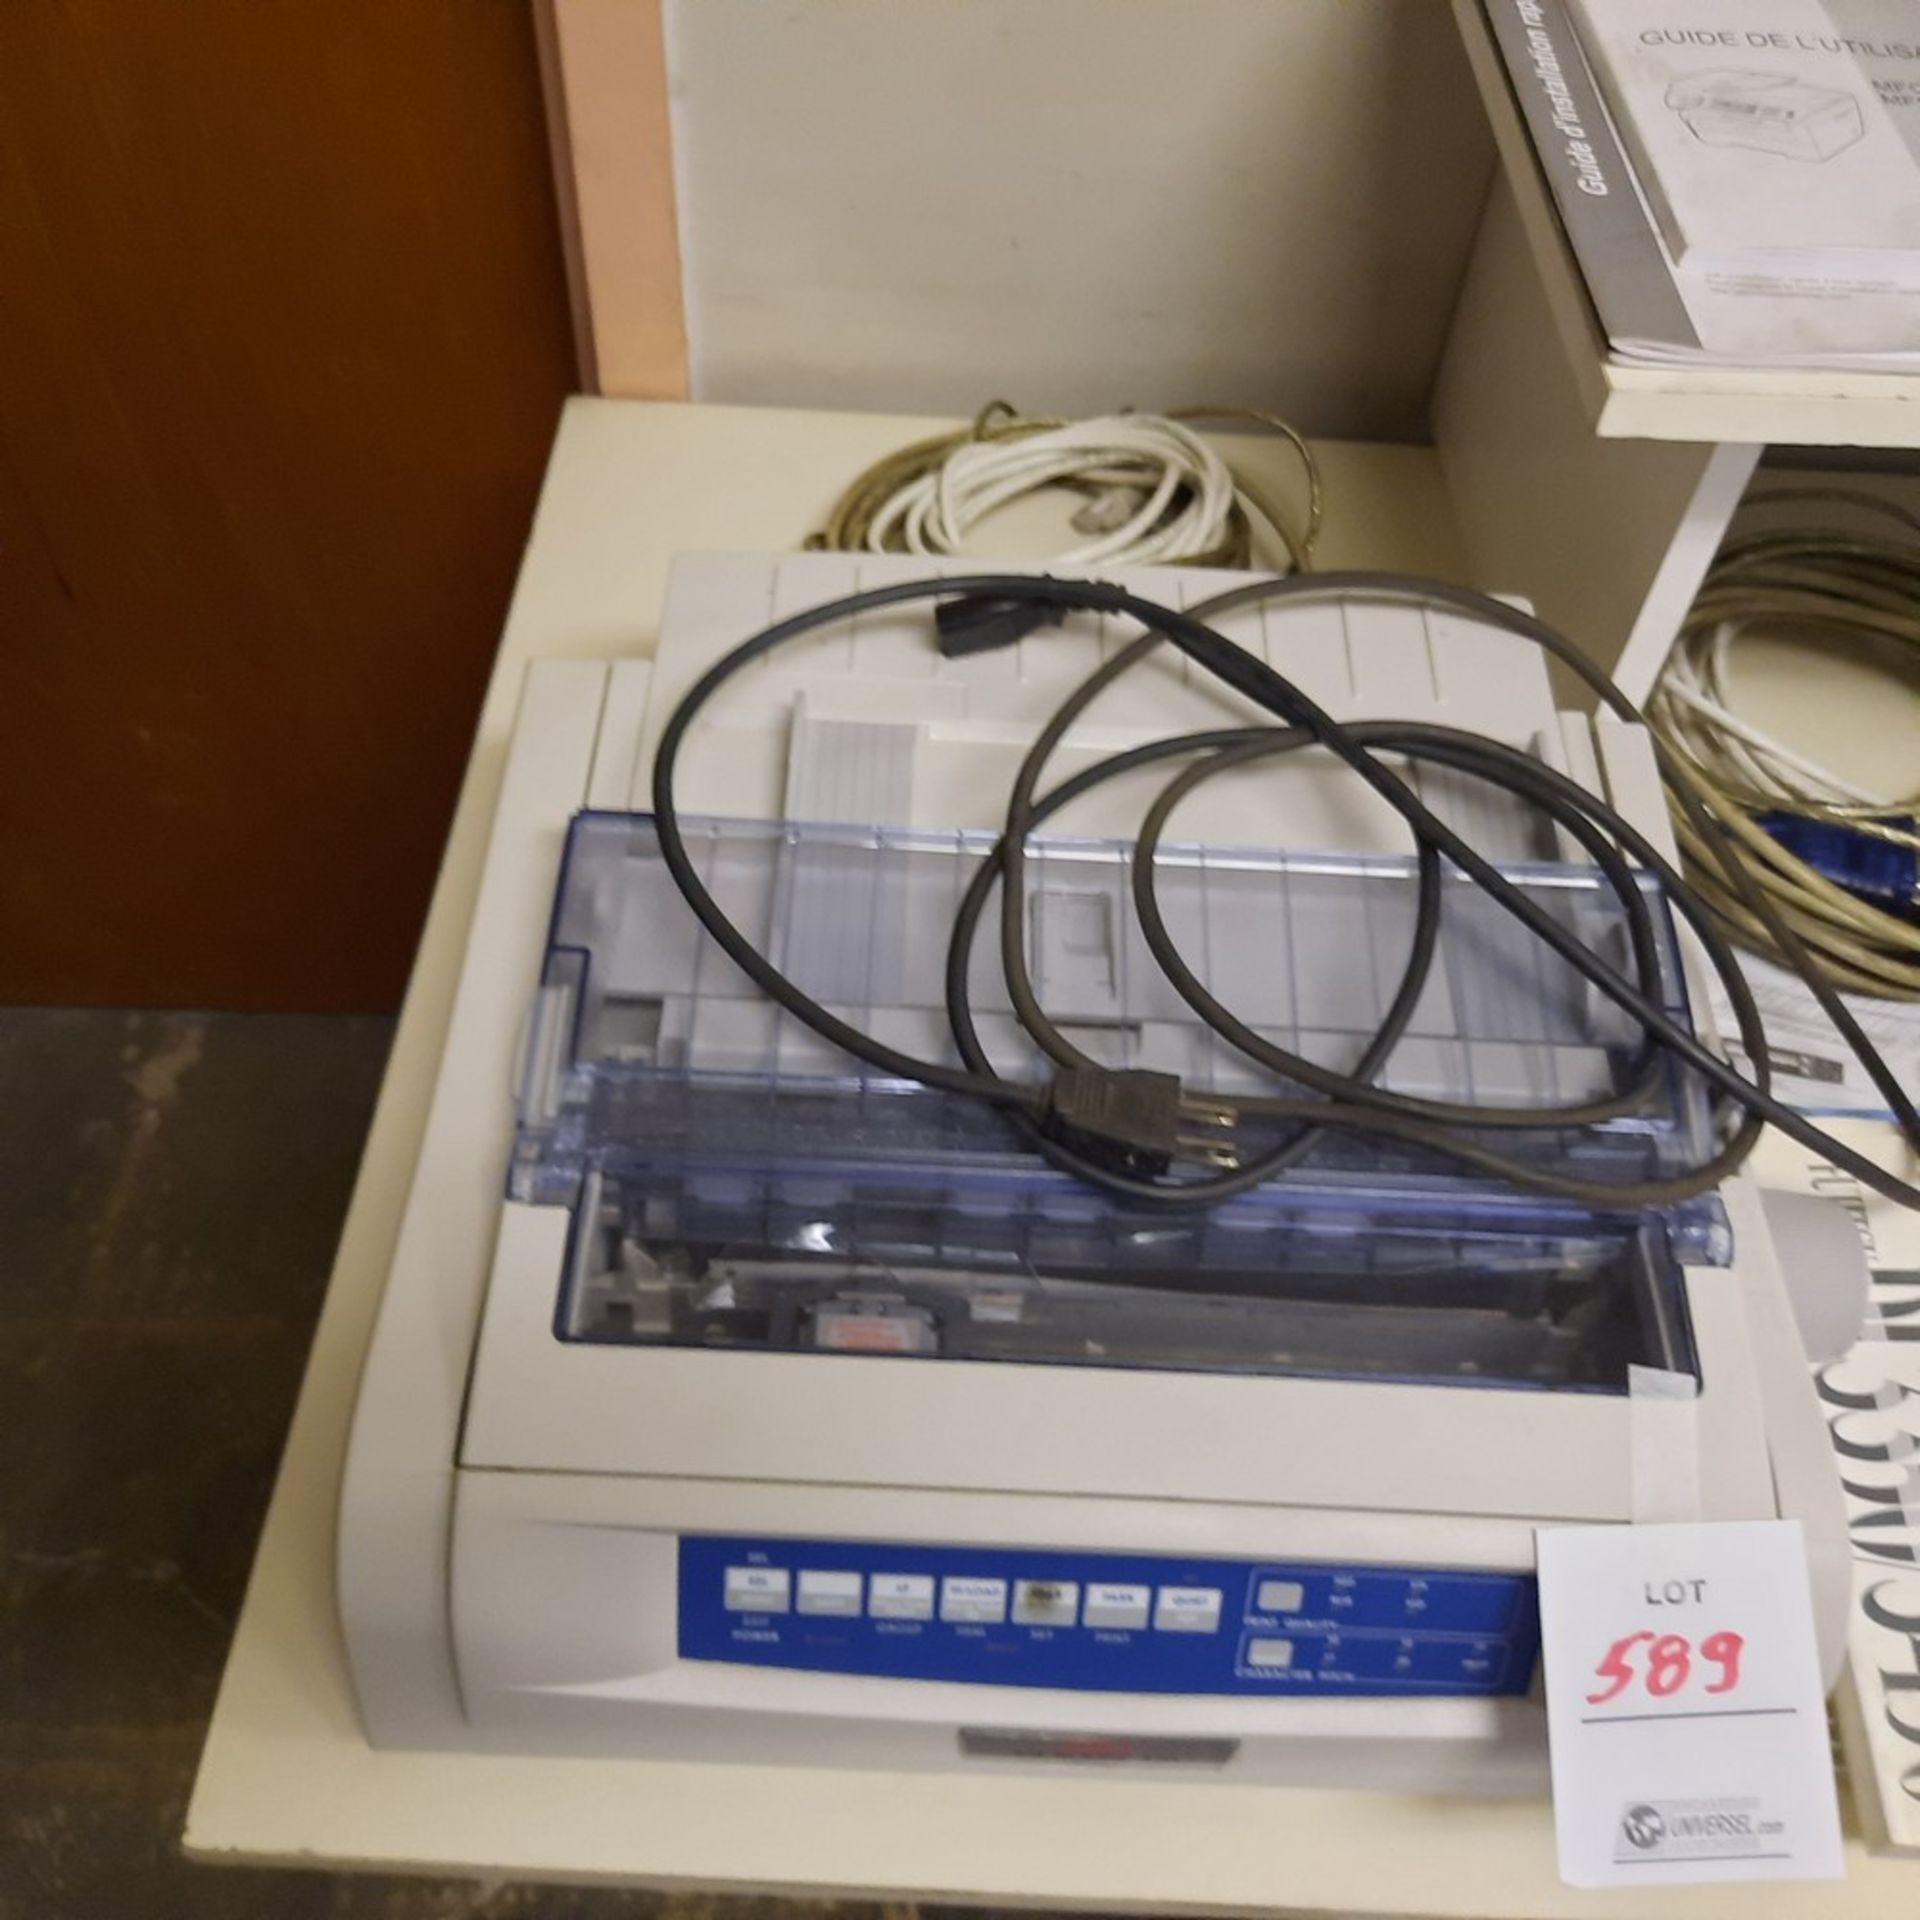 OKI Microline 420 9-pin Printer